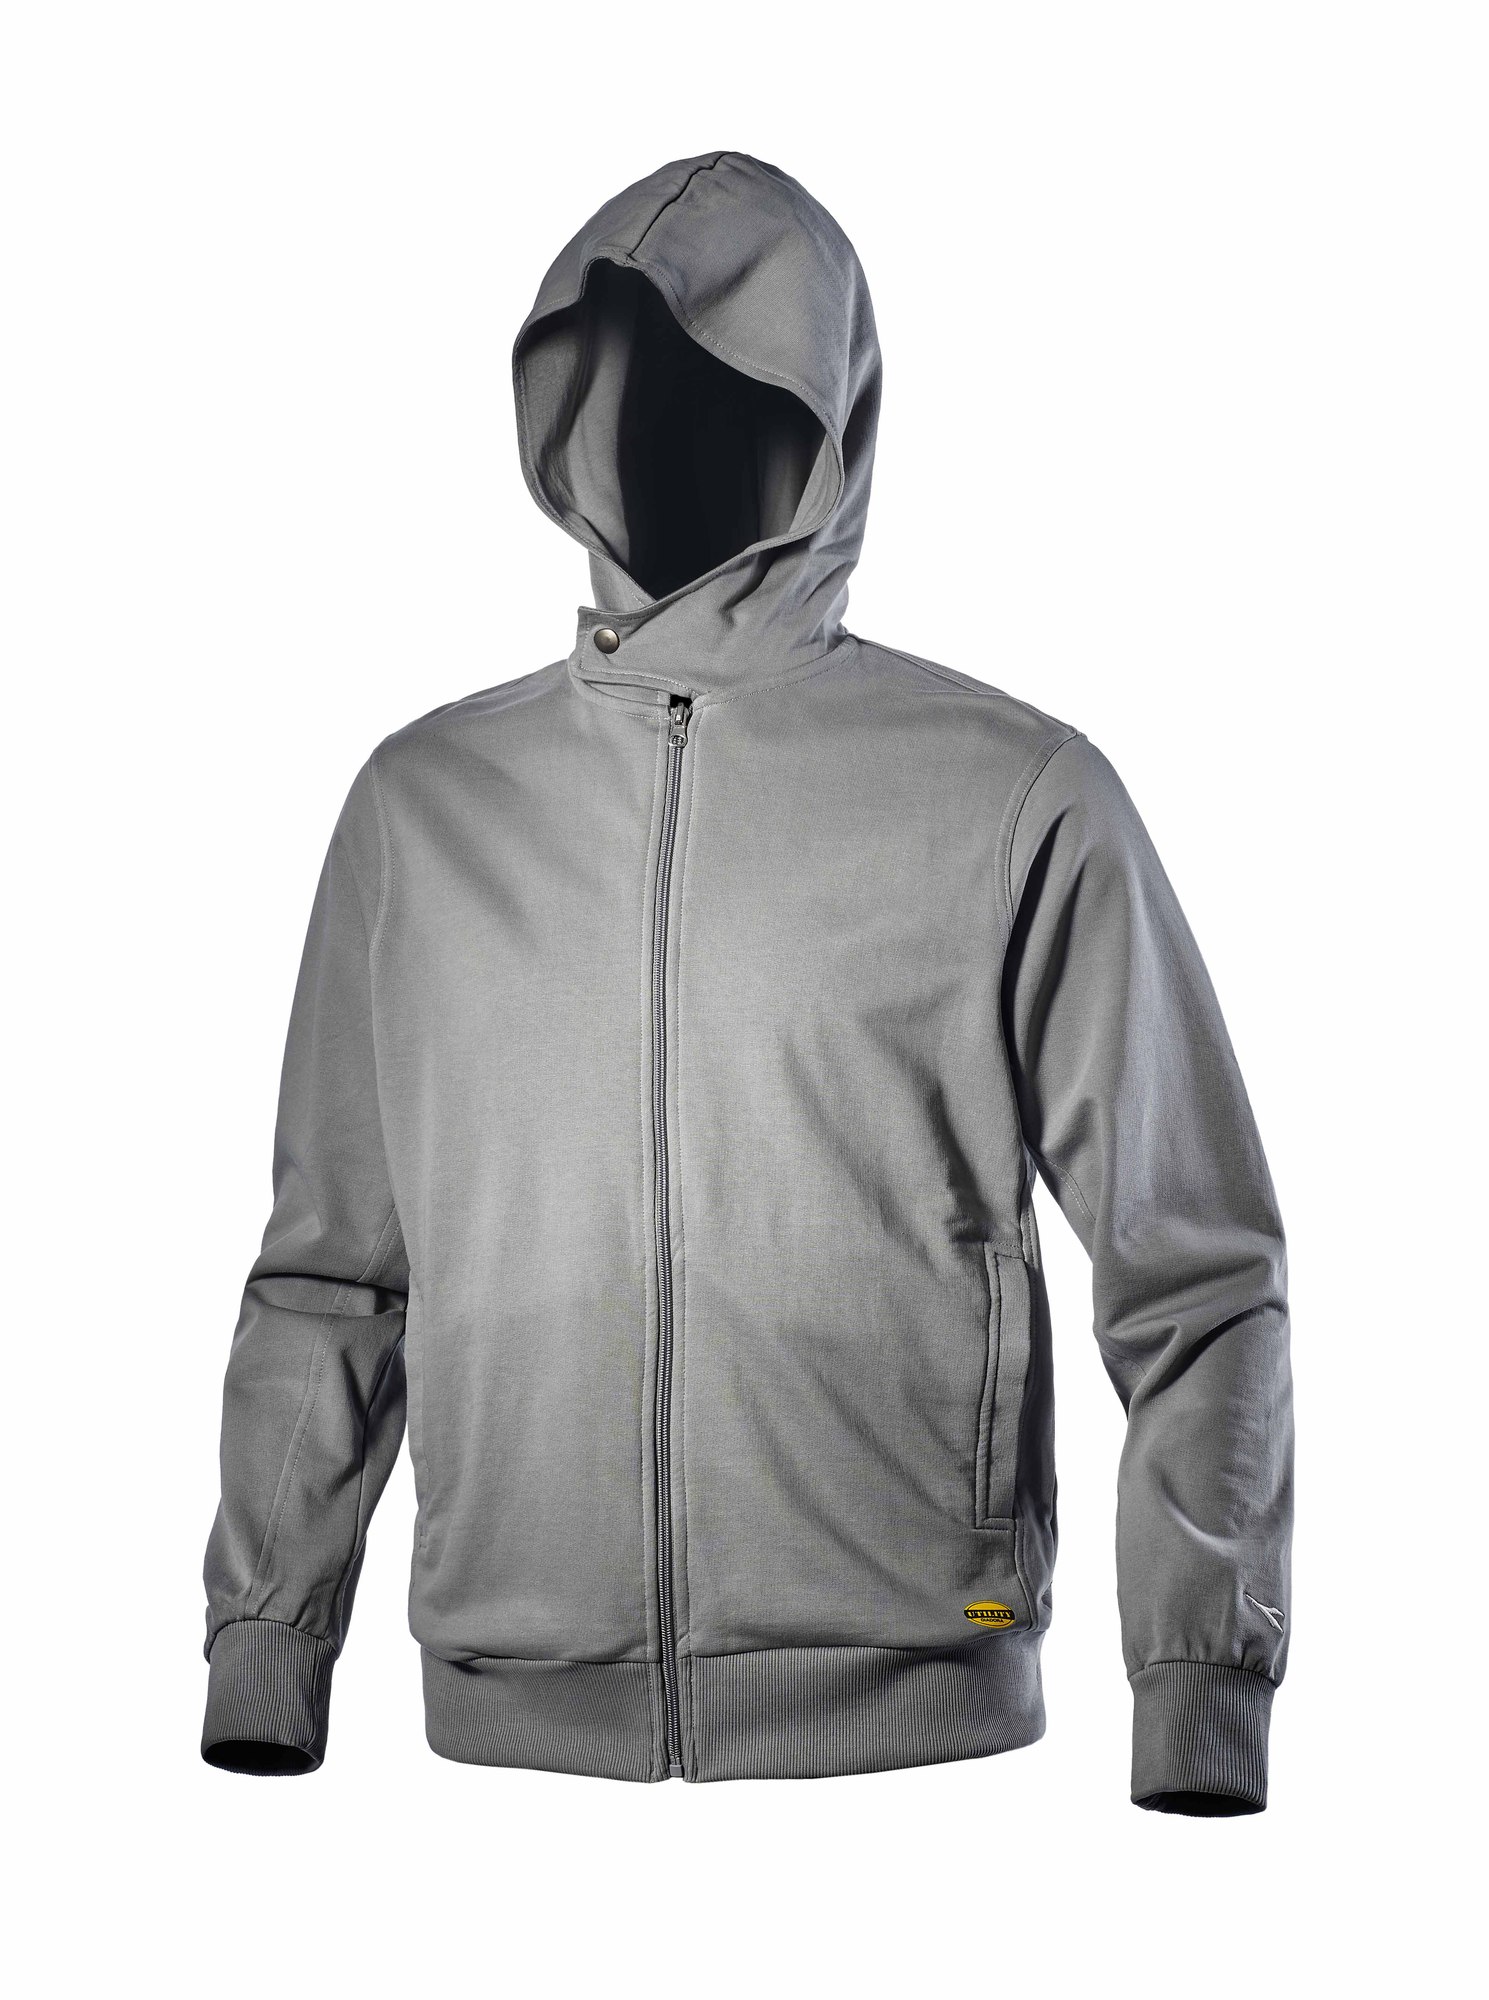 Sweatshirt THUNDER gris T2XL - DIADORA SPA - 702.157767.XXL 75070